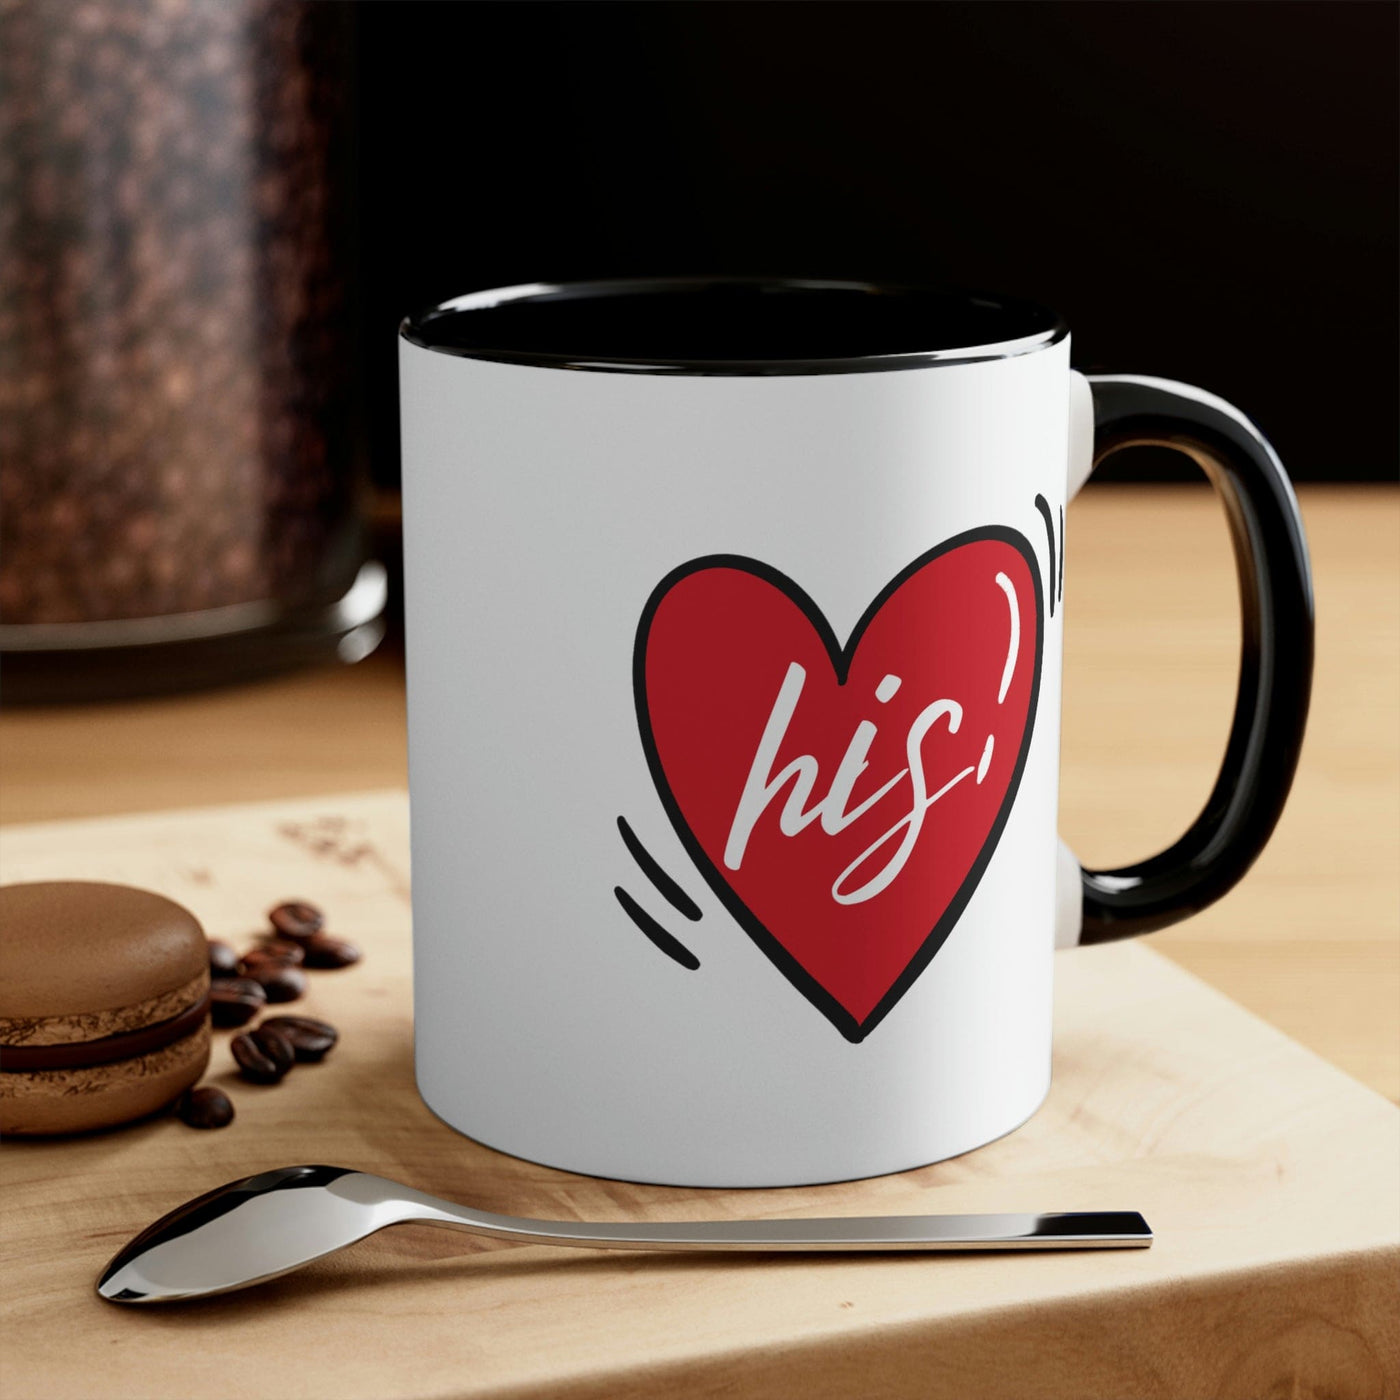 Two-tone Accent Ceramic Mug 11oz Say It Soul His Heart Couples - Decorative